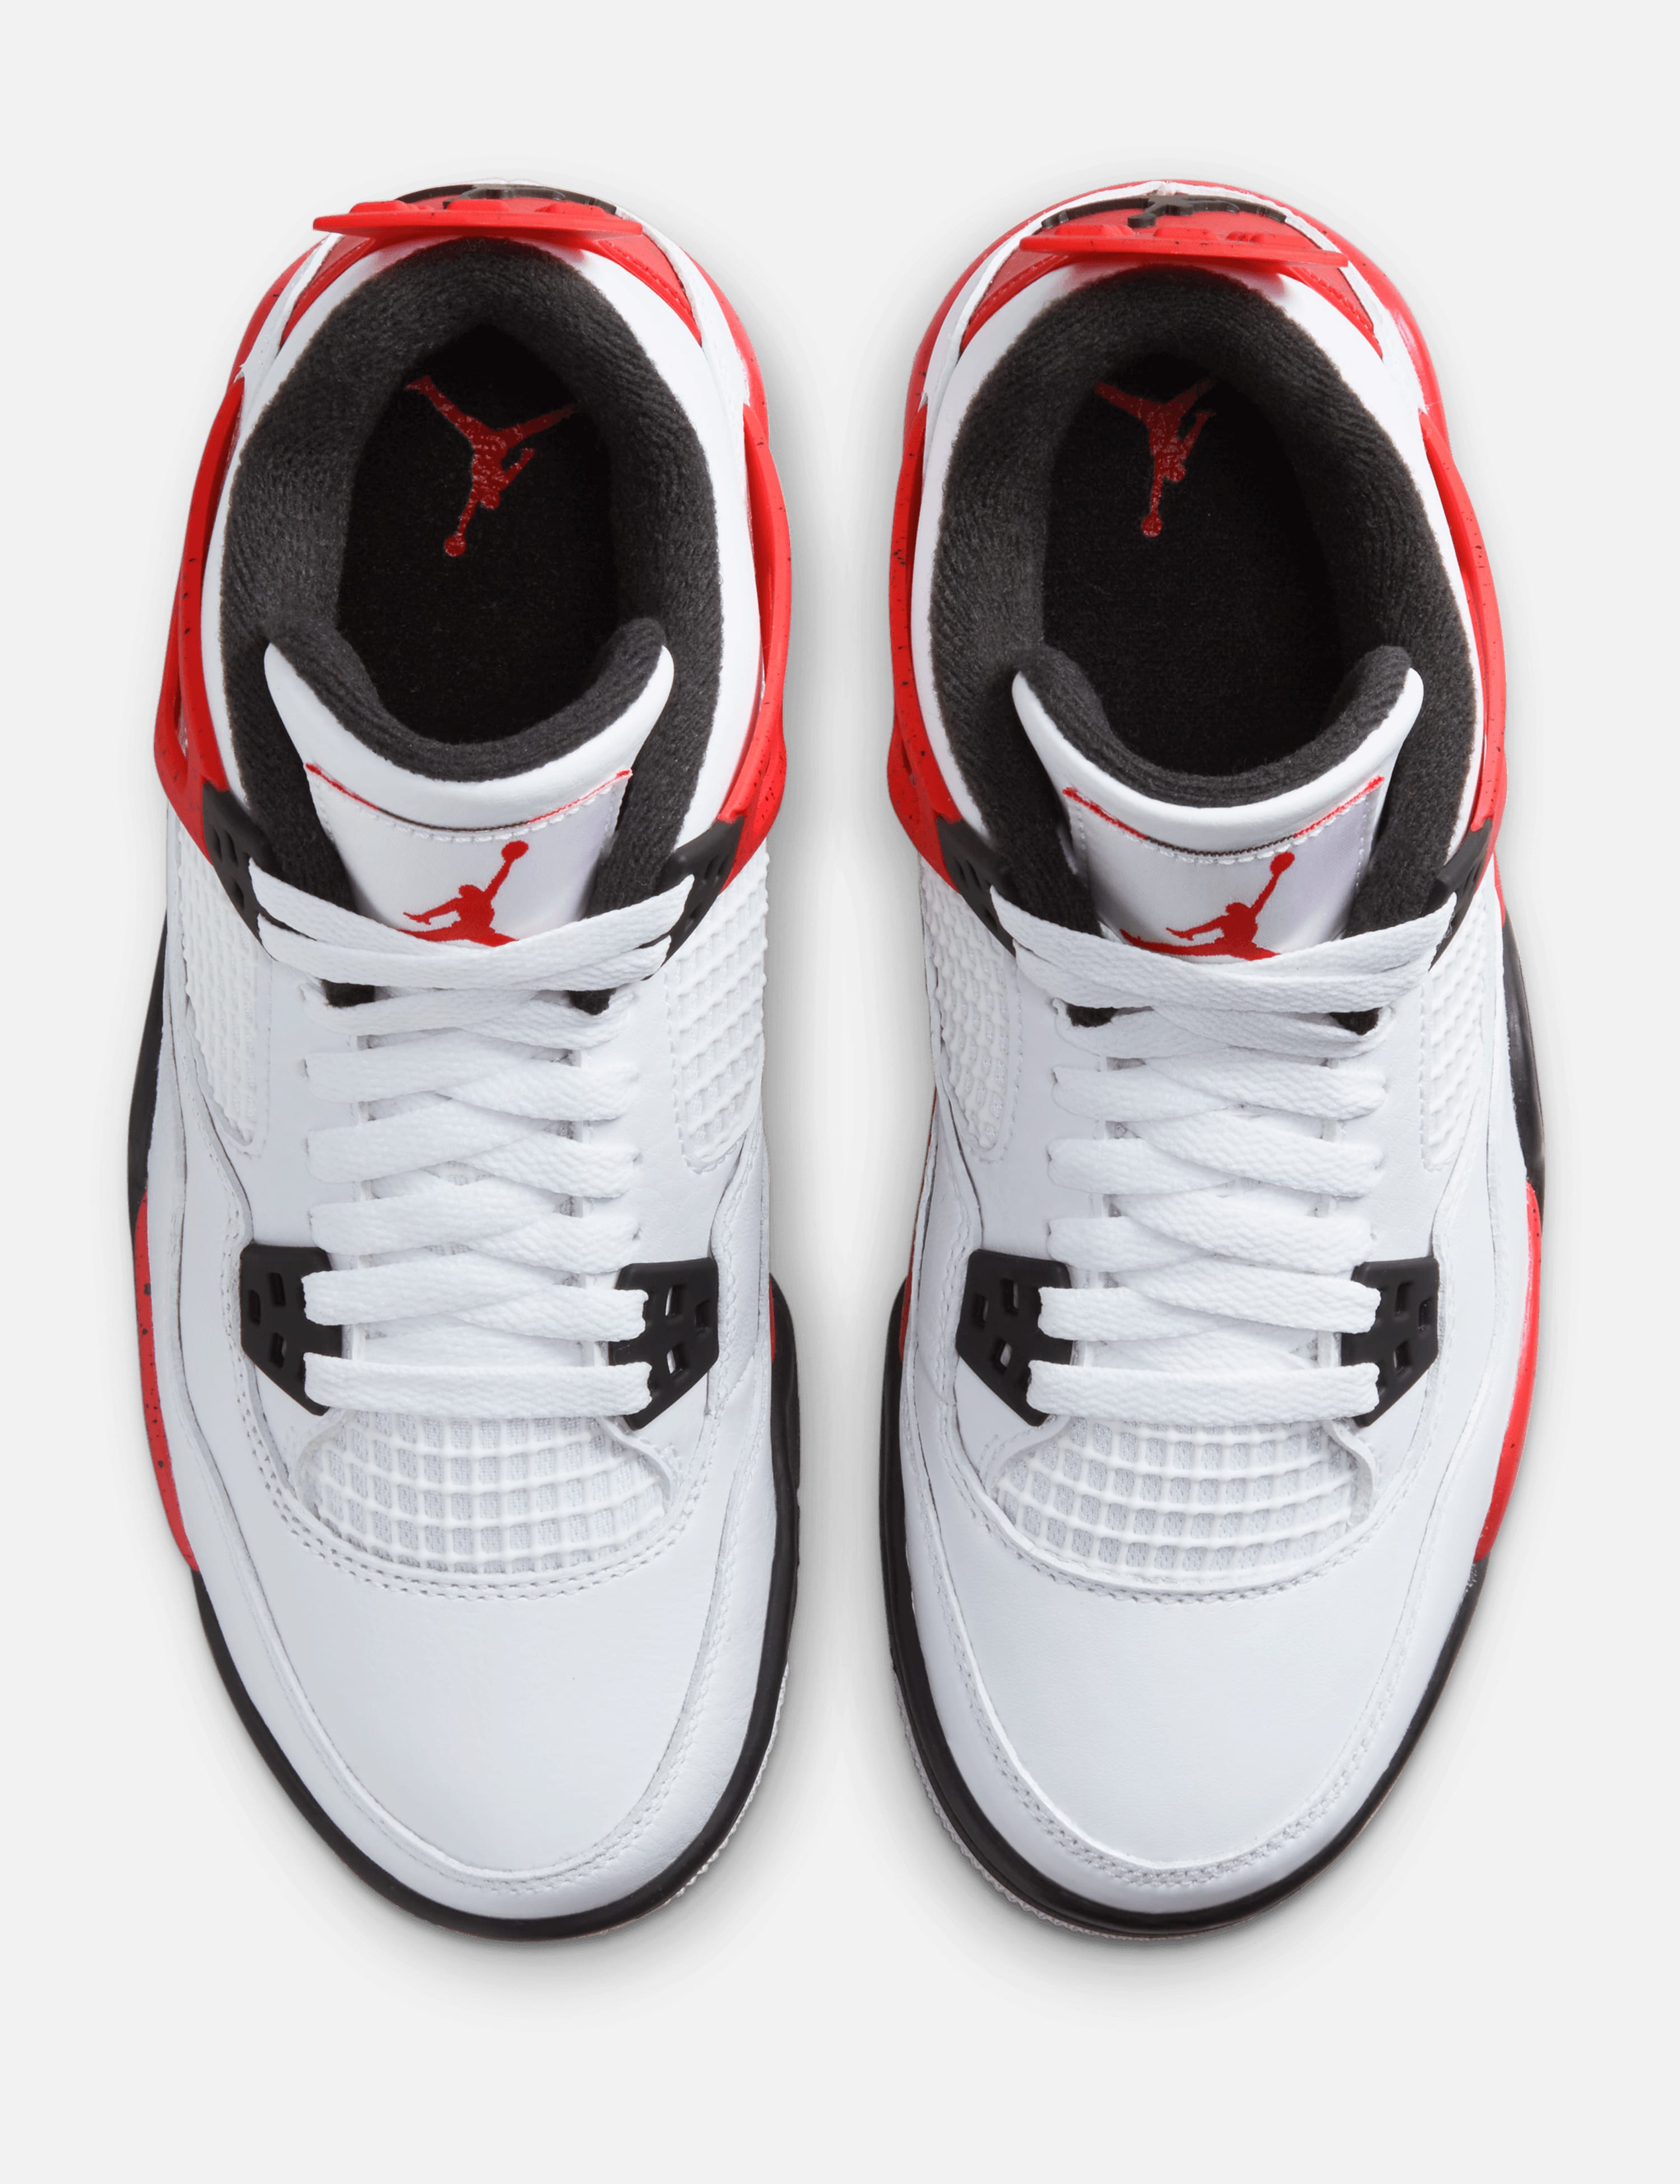 Jordan Brand - Air Jordan 4 Retro (GS) 'Red Cement' | HBX